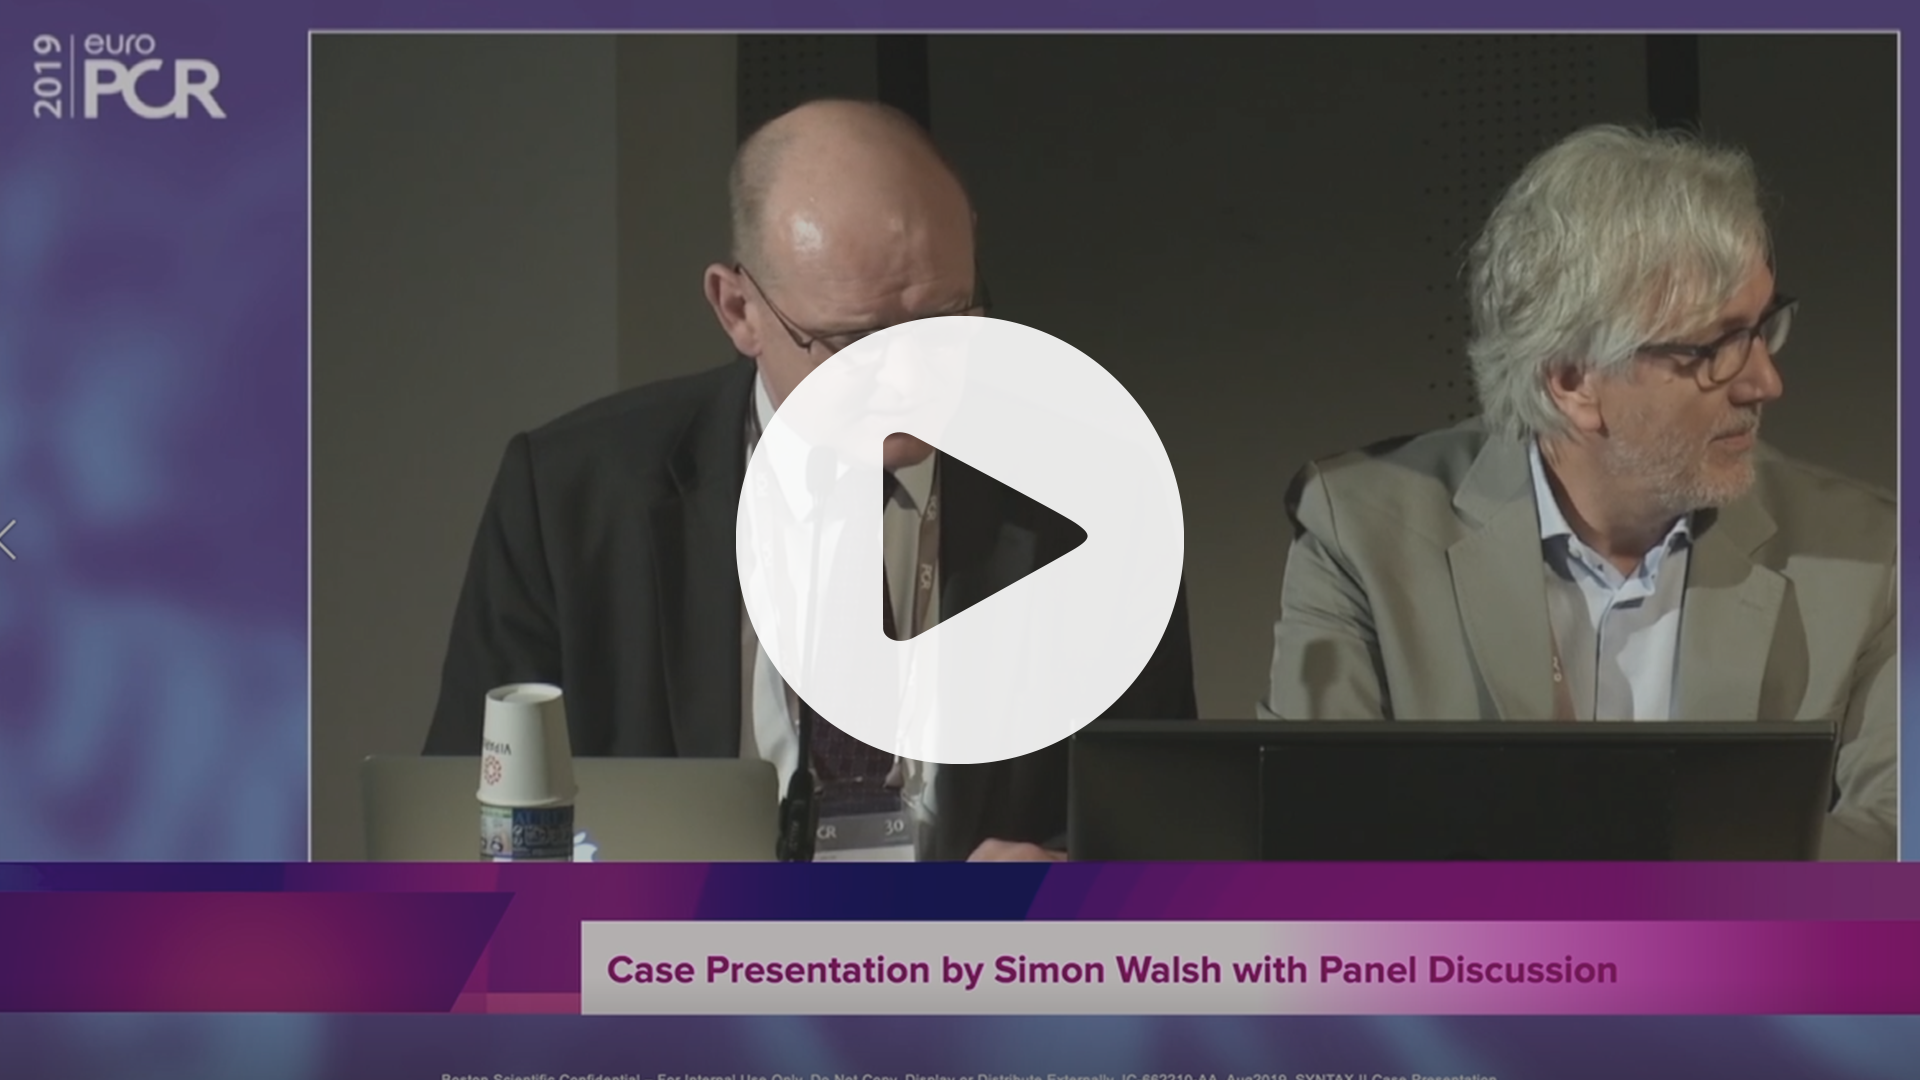 SYNTAX II Case Presentation By Simon Walsh, VIdeo